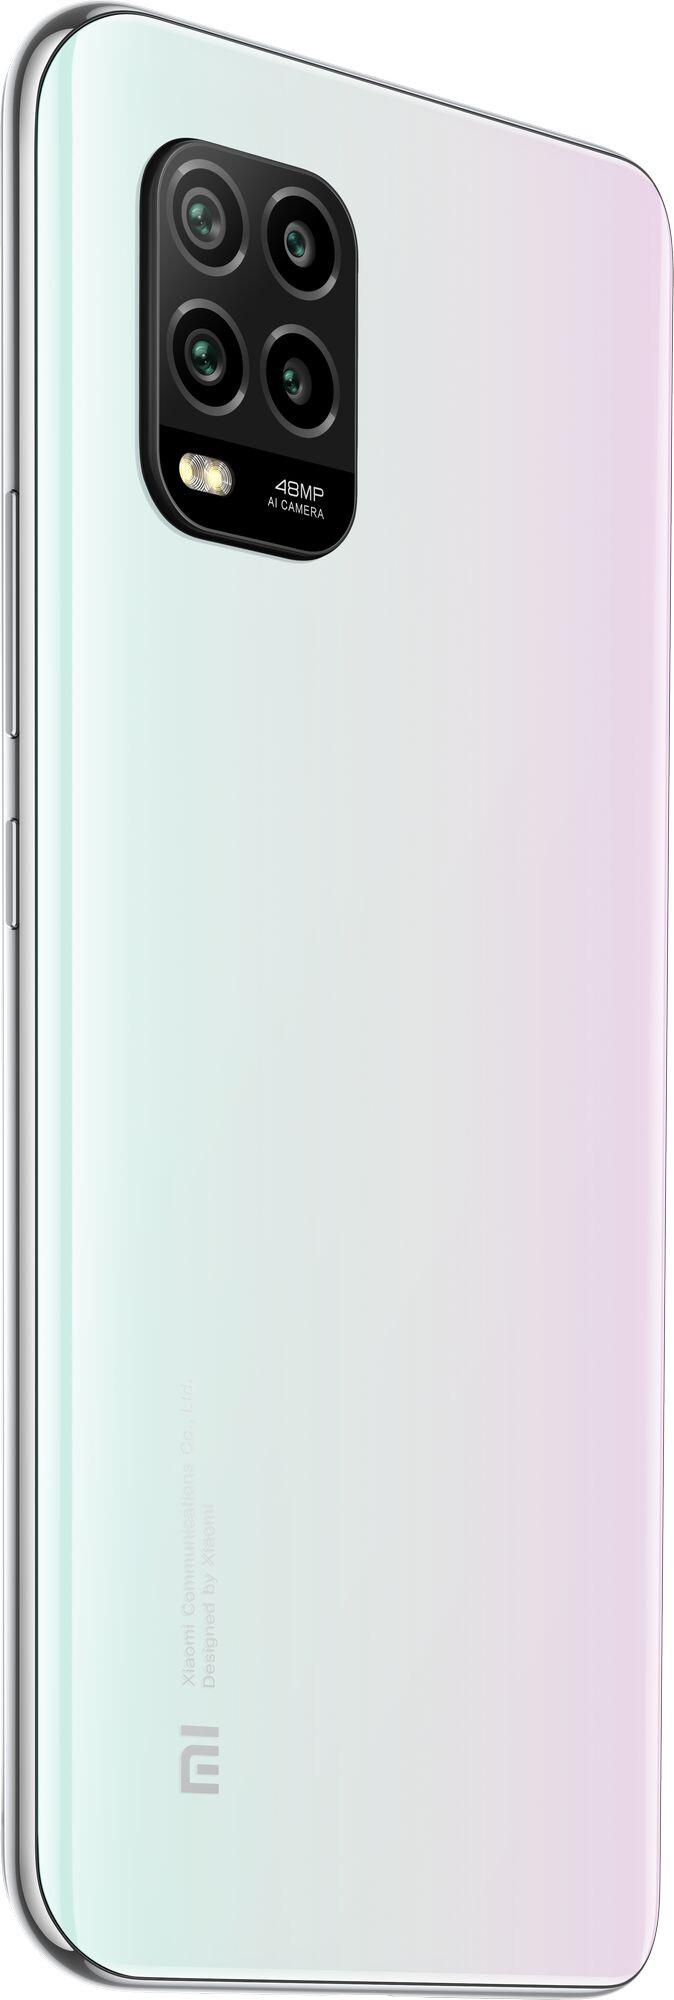 Купить Смартфон Xiaomi Mi 10 Lite 5G 6/128Gb Dream White